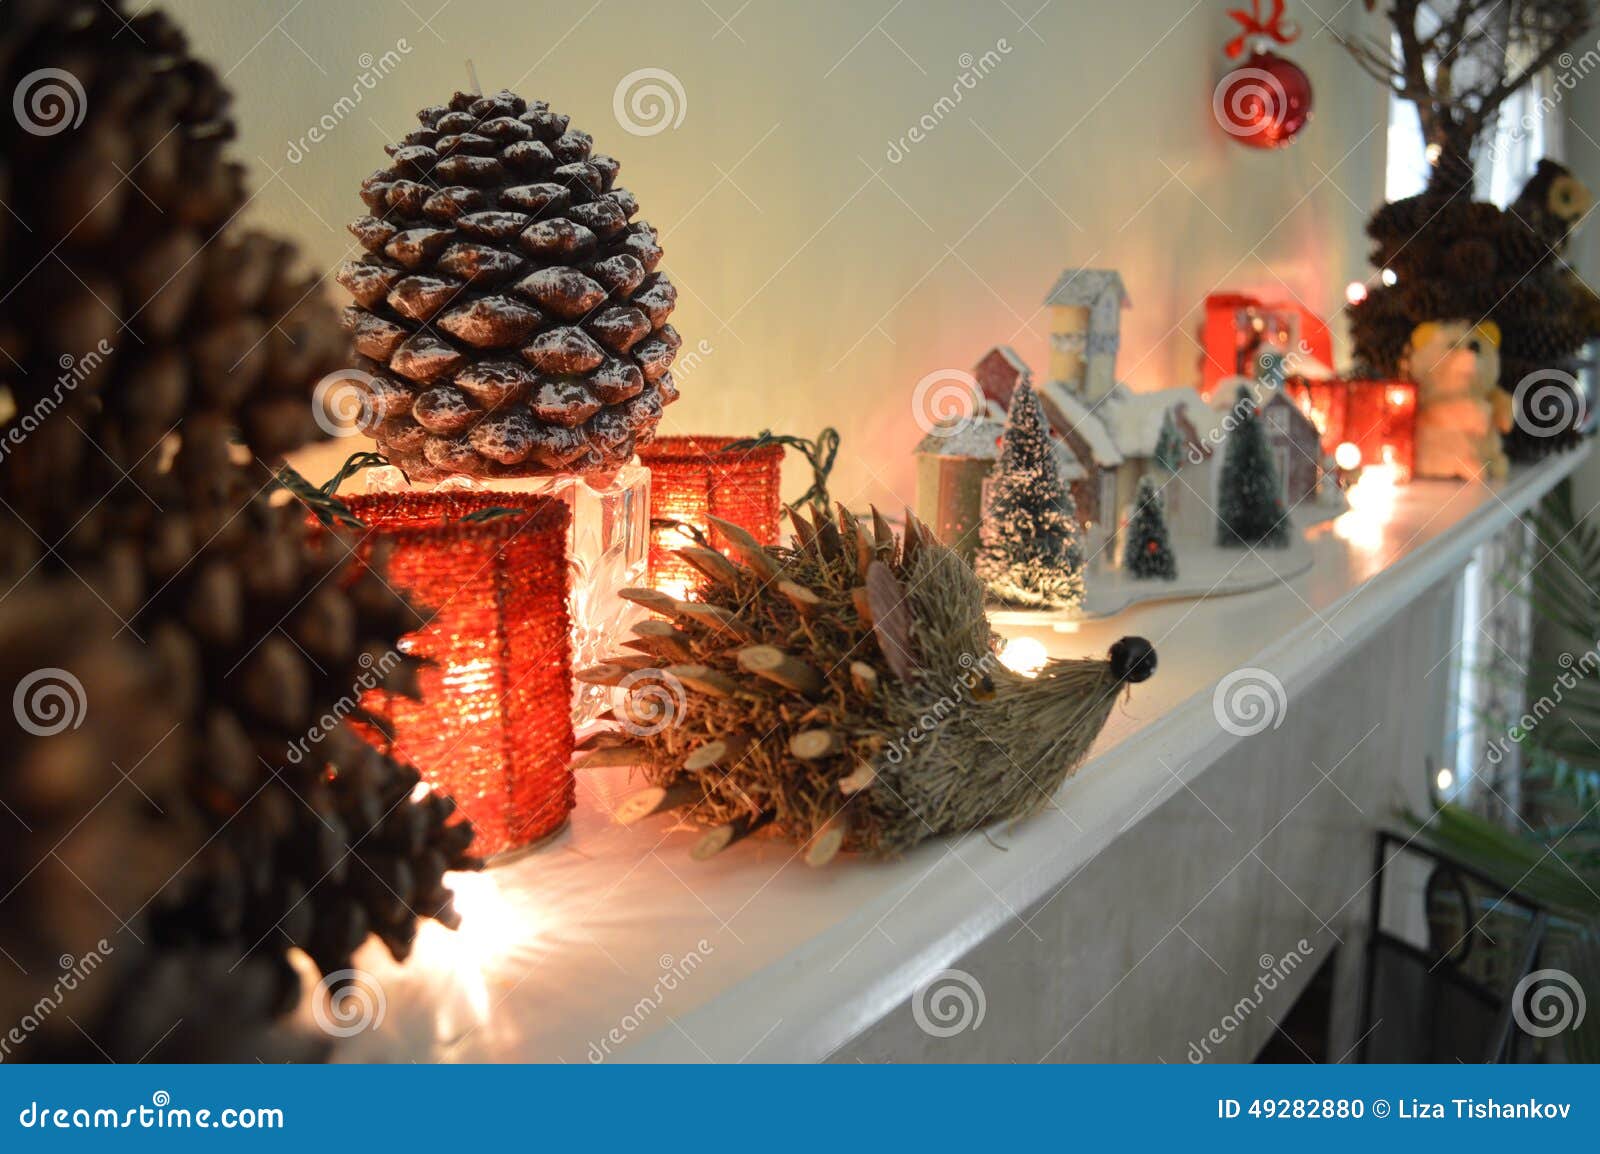 christmas mantel decorations